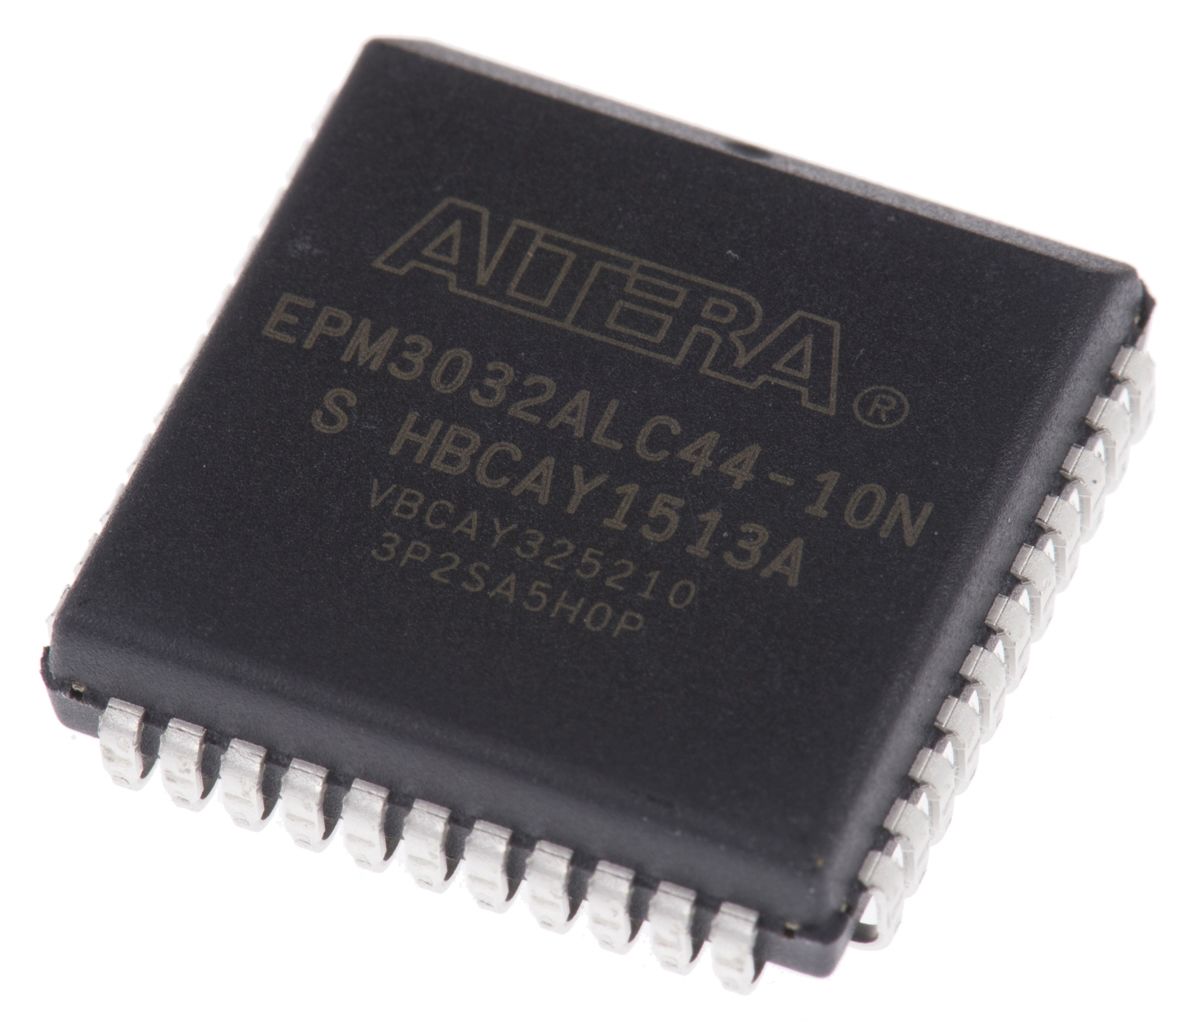 Altera EPM3032ALC44-10N, CPLD MAX 3000A EEPROM 32 Cells, 34 I/O, 2 Labs, ISP, 44-Pin PLCC